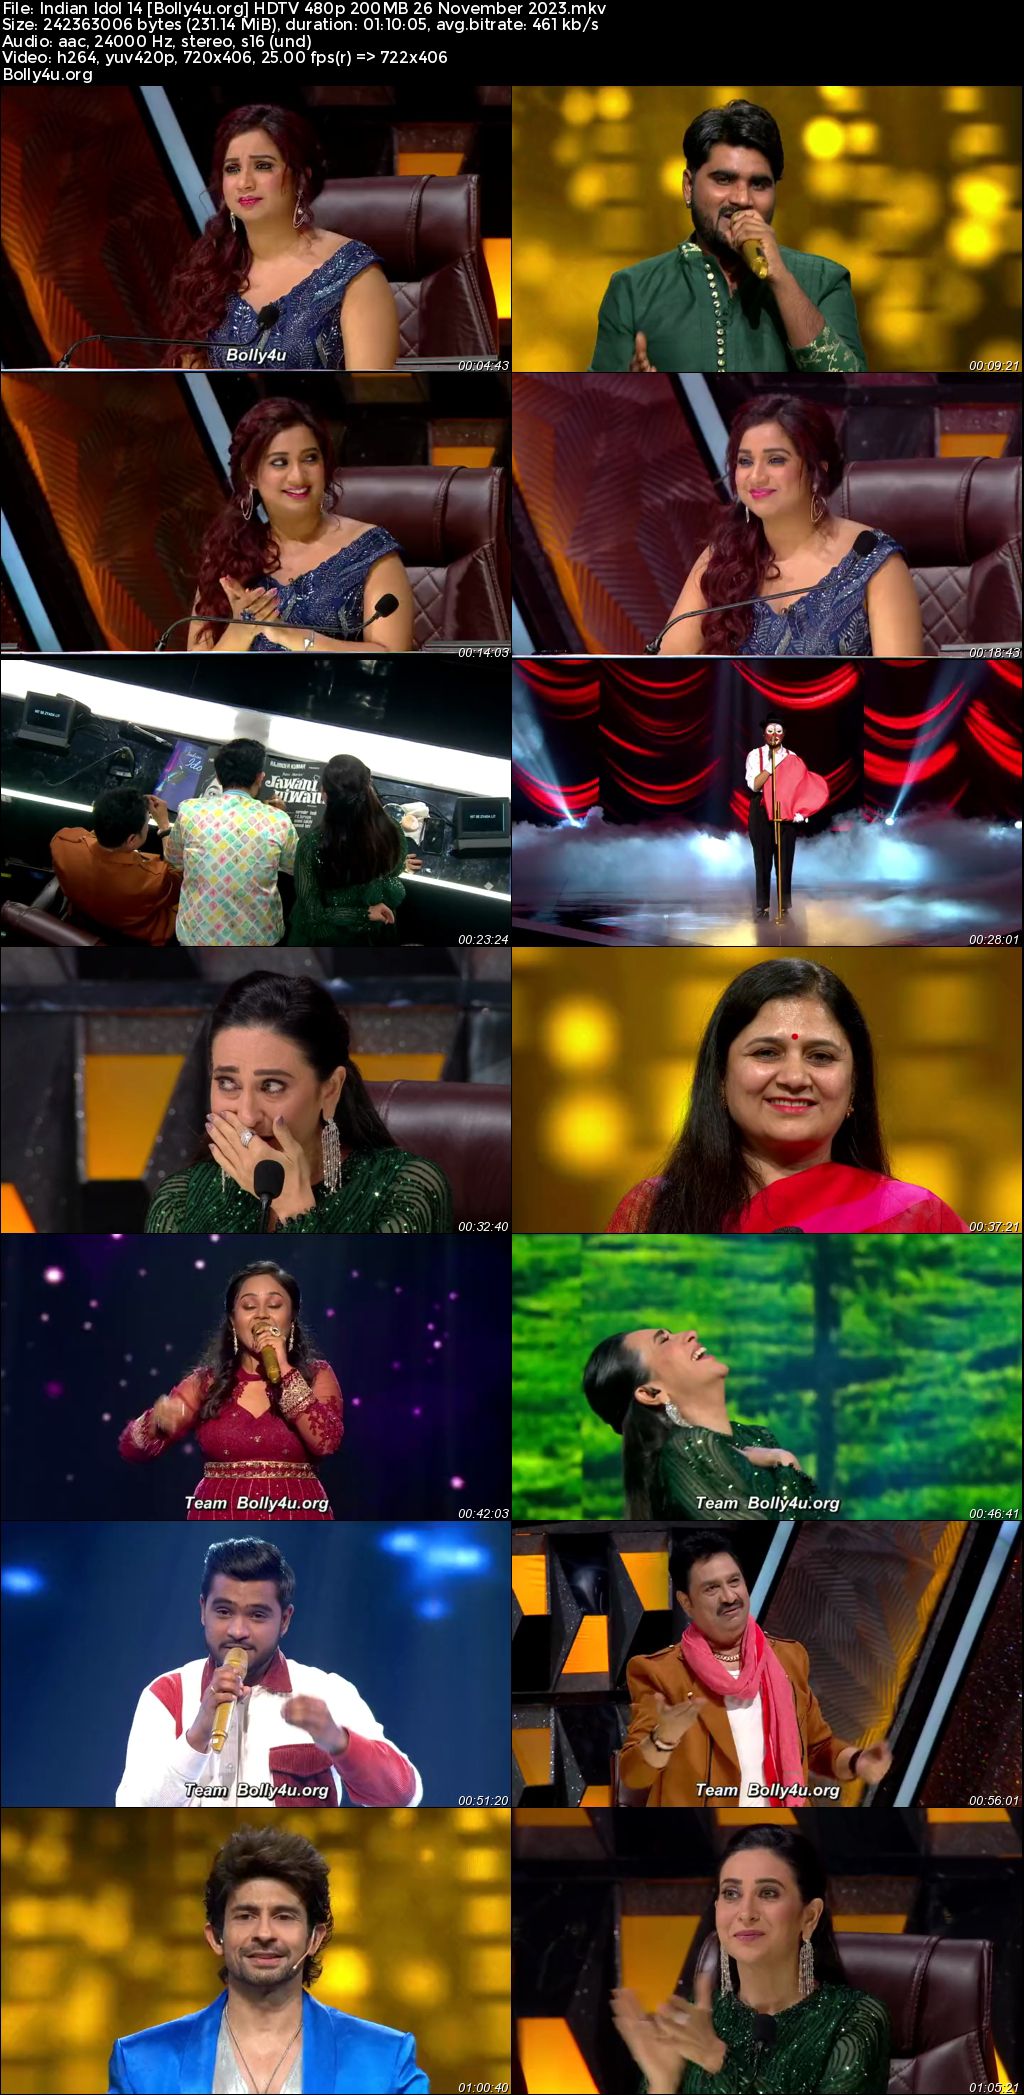 Indian Idol 14 HDTV 480p 200MB 26 November 2023 Download